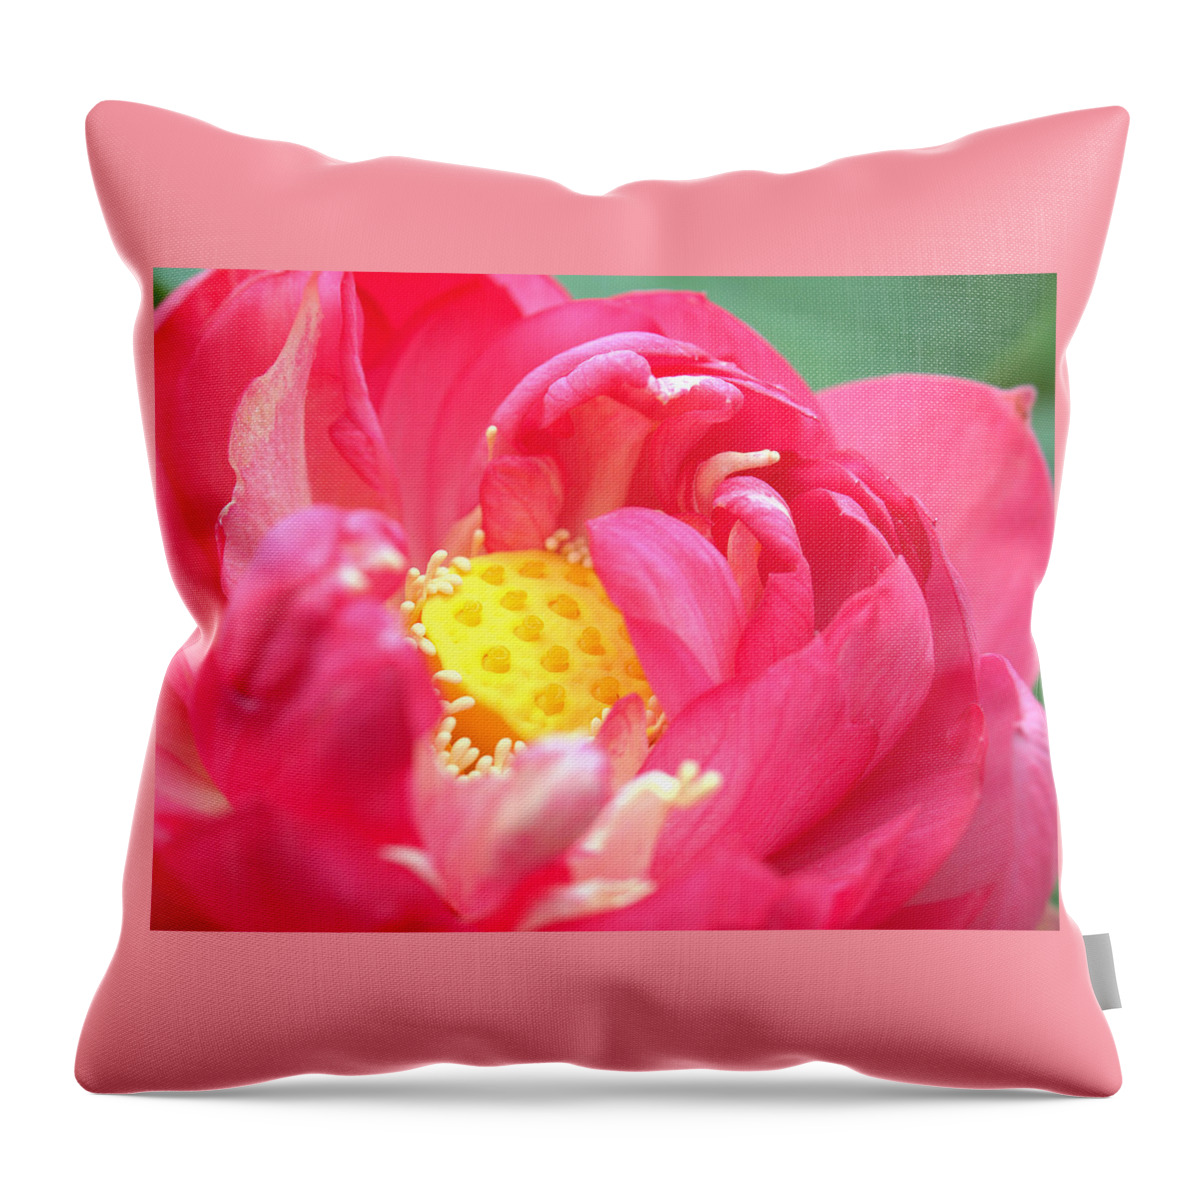 Lotus Throw Pillow featuring the photograph Pink Lotus Flower by Yuka Kato